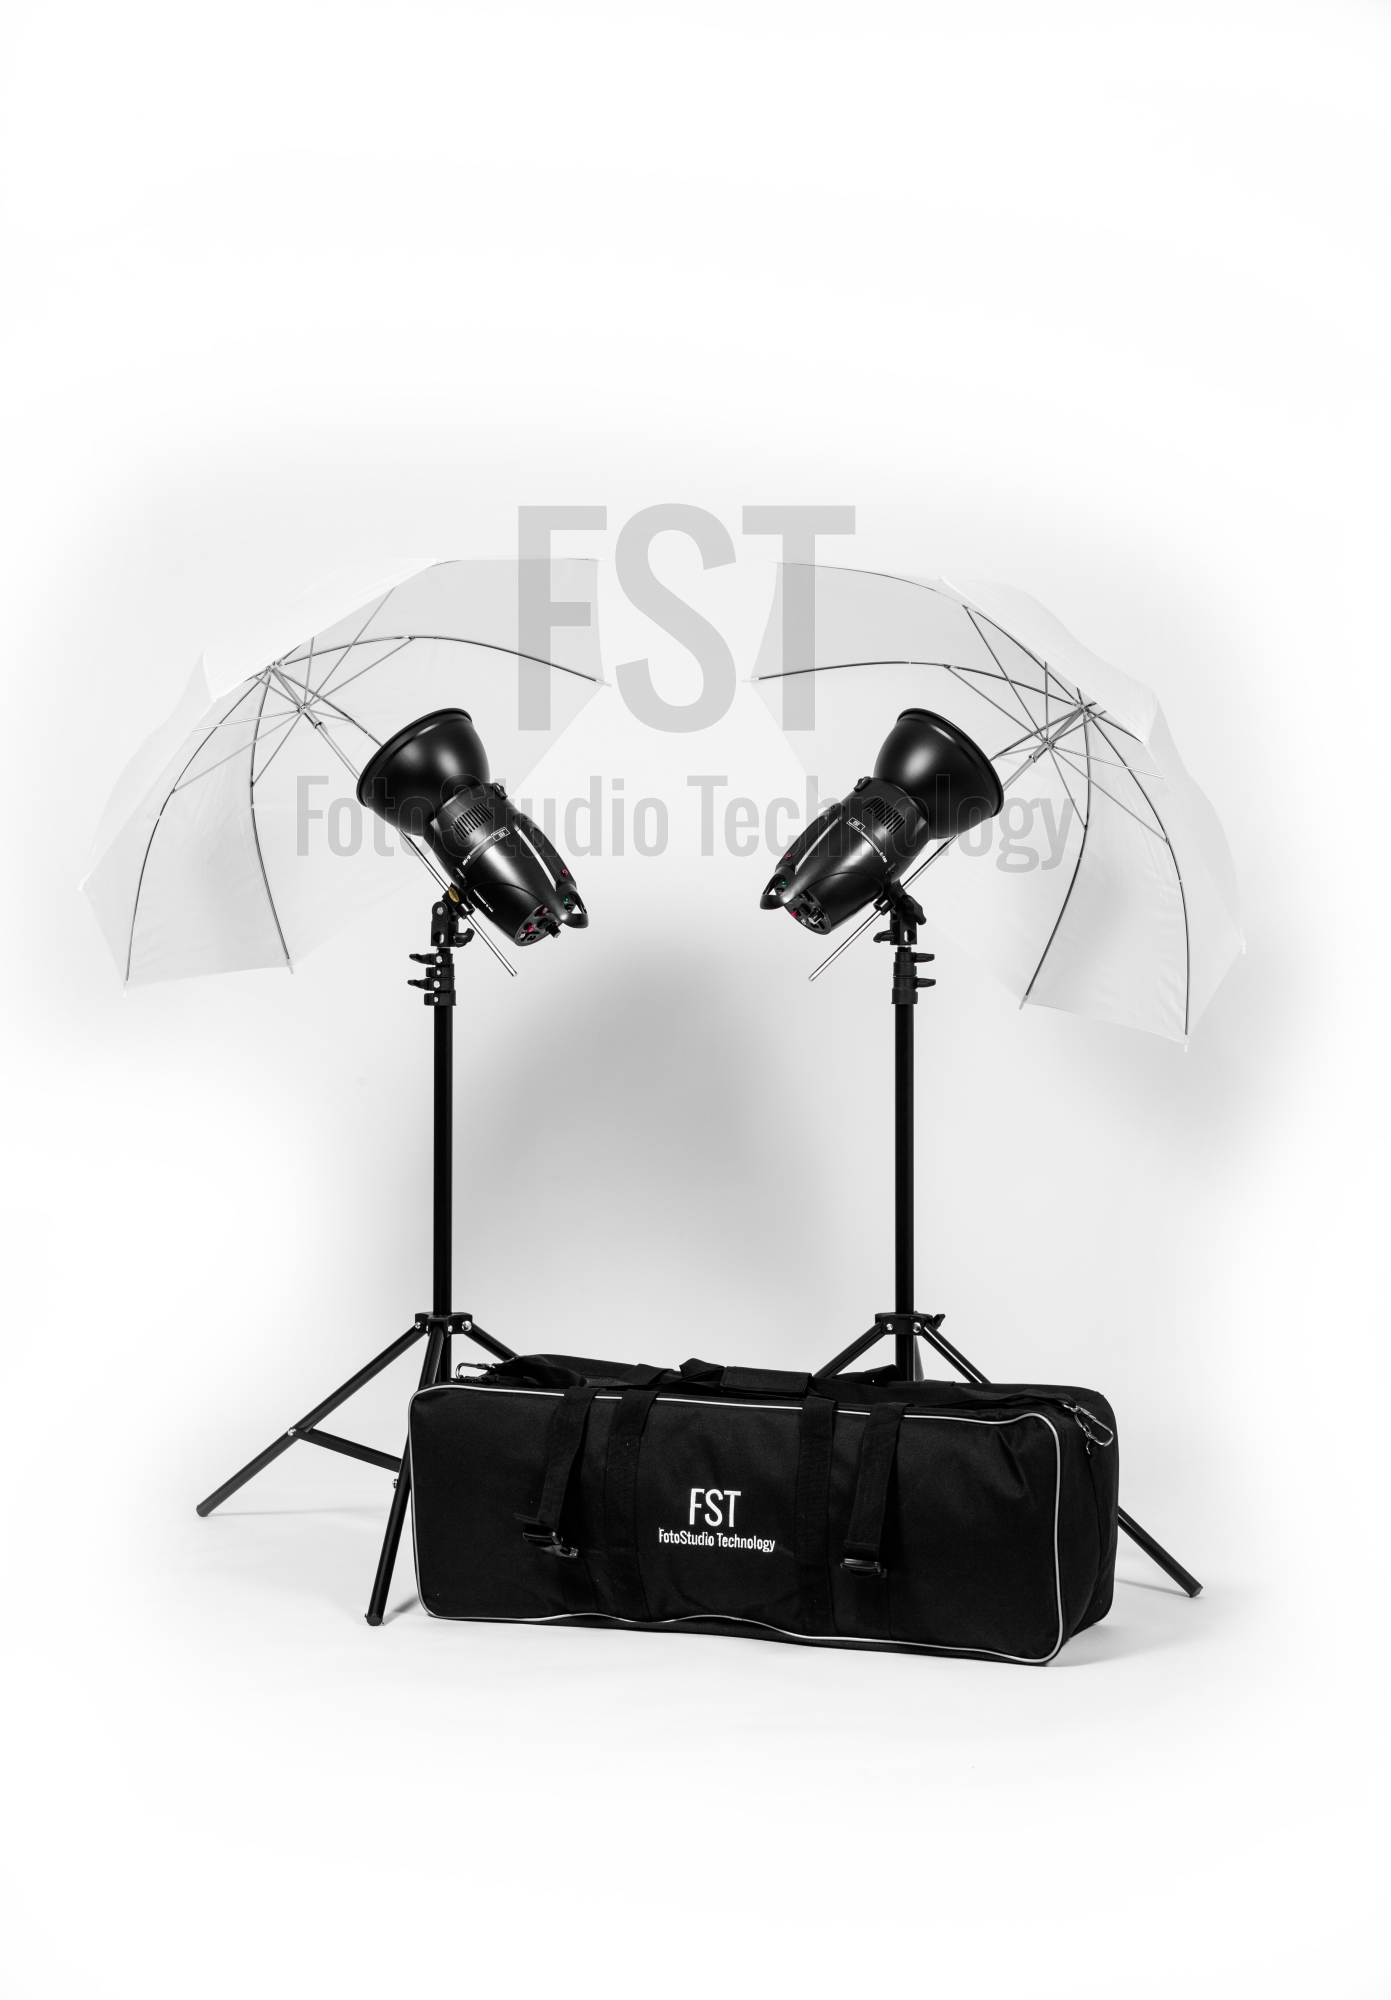 Комплект импульсного света FST E-180 Umbrella Kit + радиосинхронизатор FST VC-604DC в подарок!